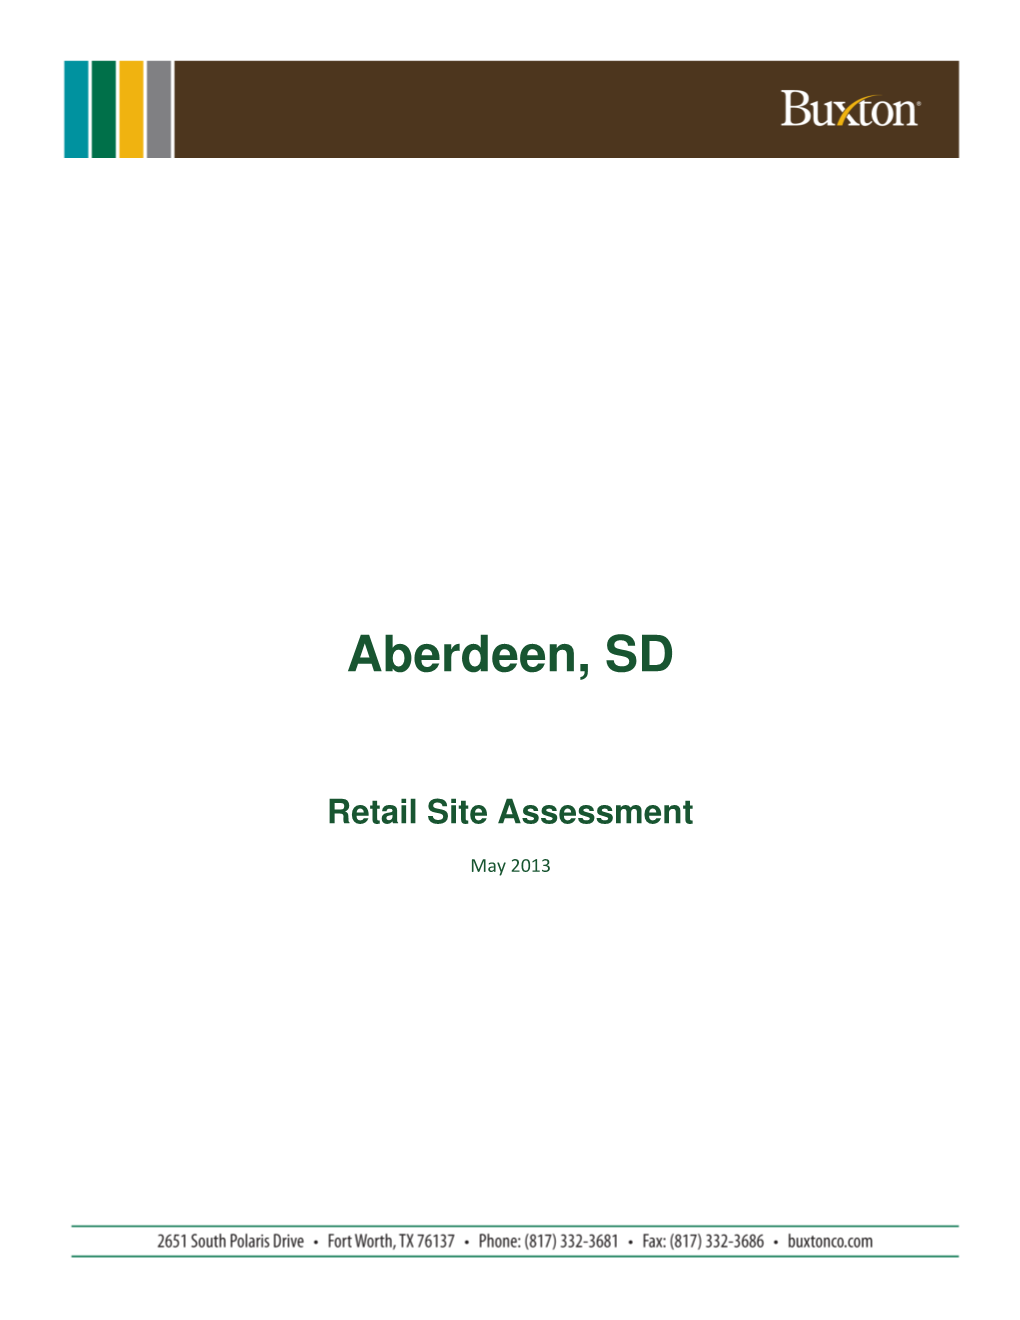 Retail Site Assessment